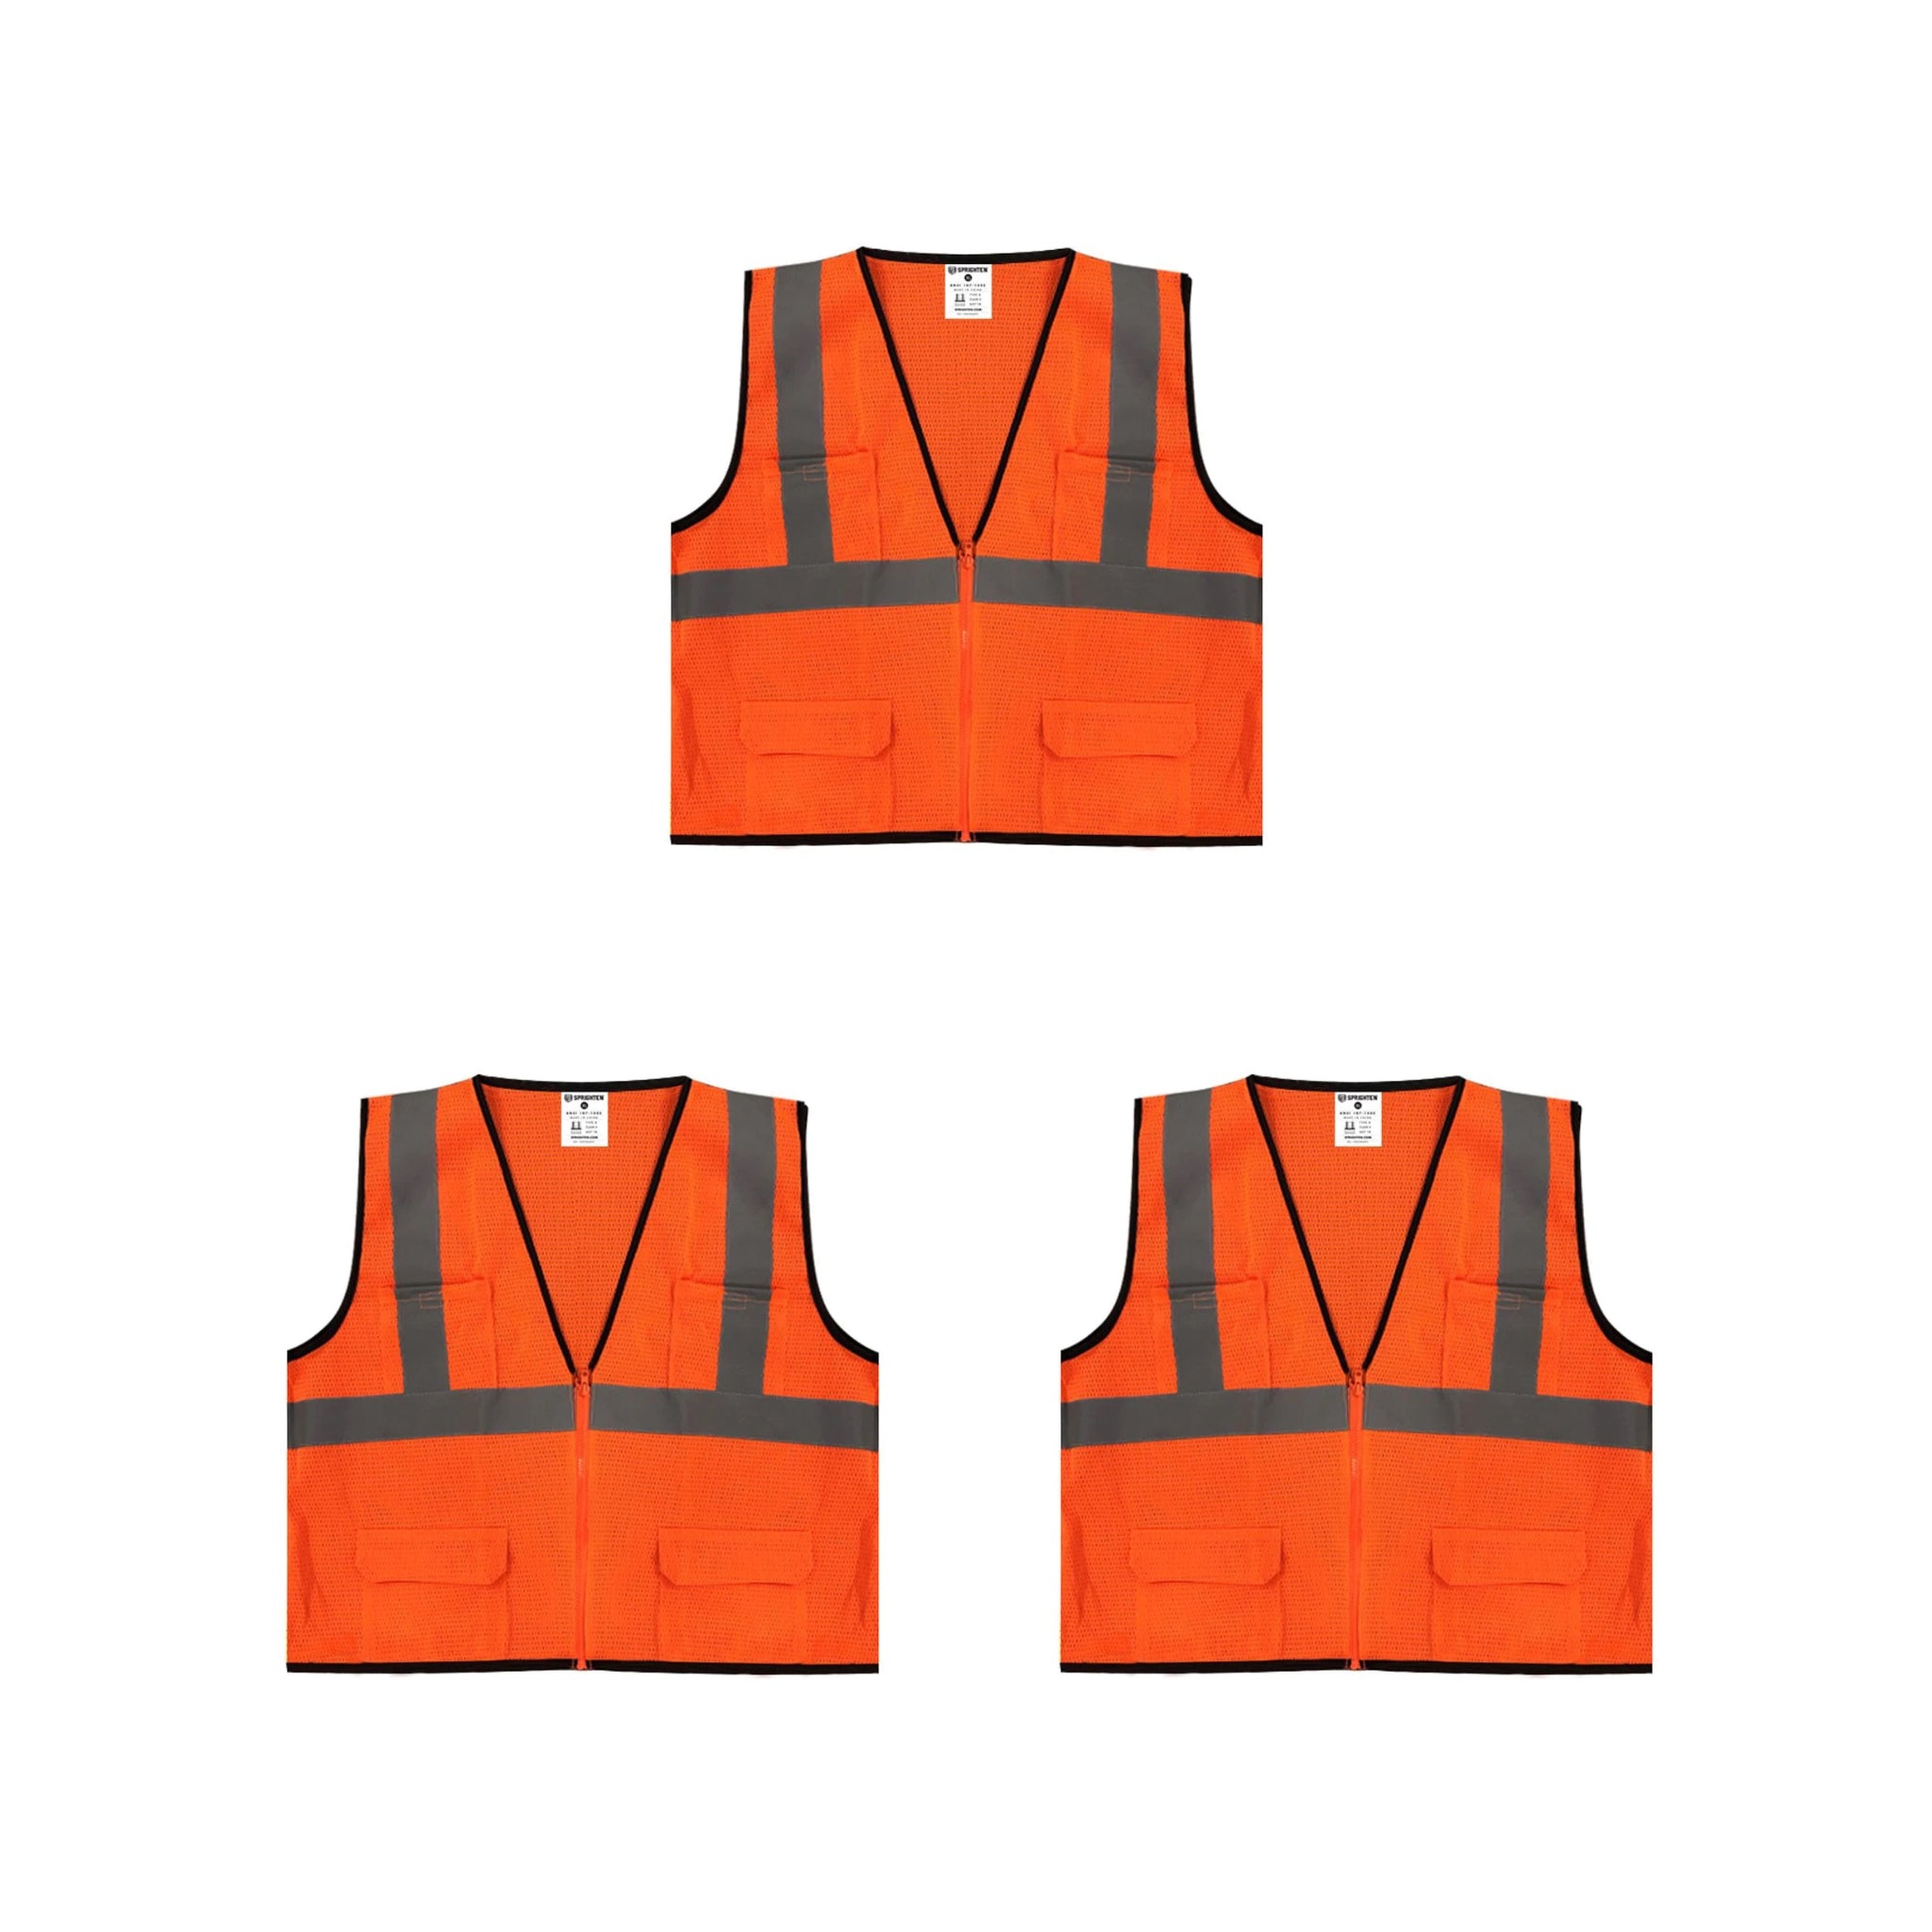 Safety Main 05EAMO Economy Vest, Class 2, All Mesh, Hi-Vis Orange, 3 Pack